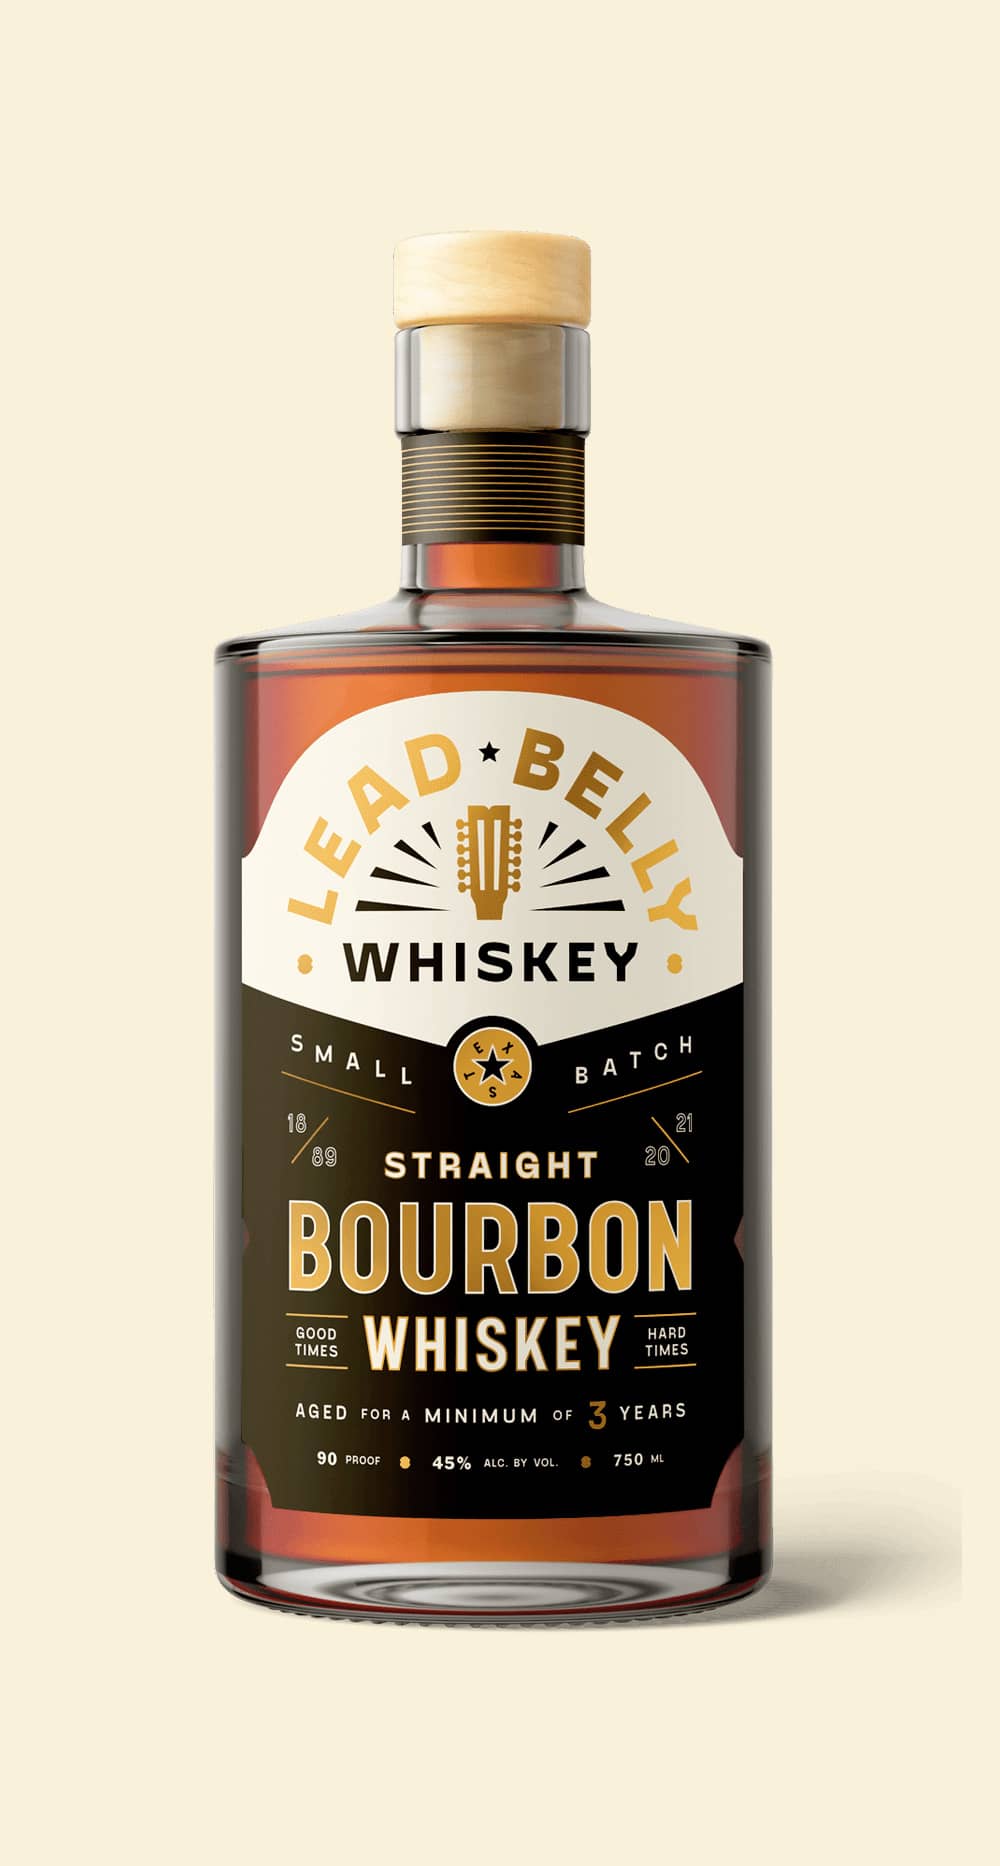 lead-belly-bourbon-whiskey-bg